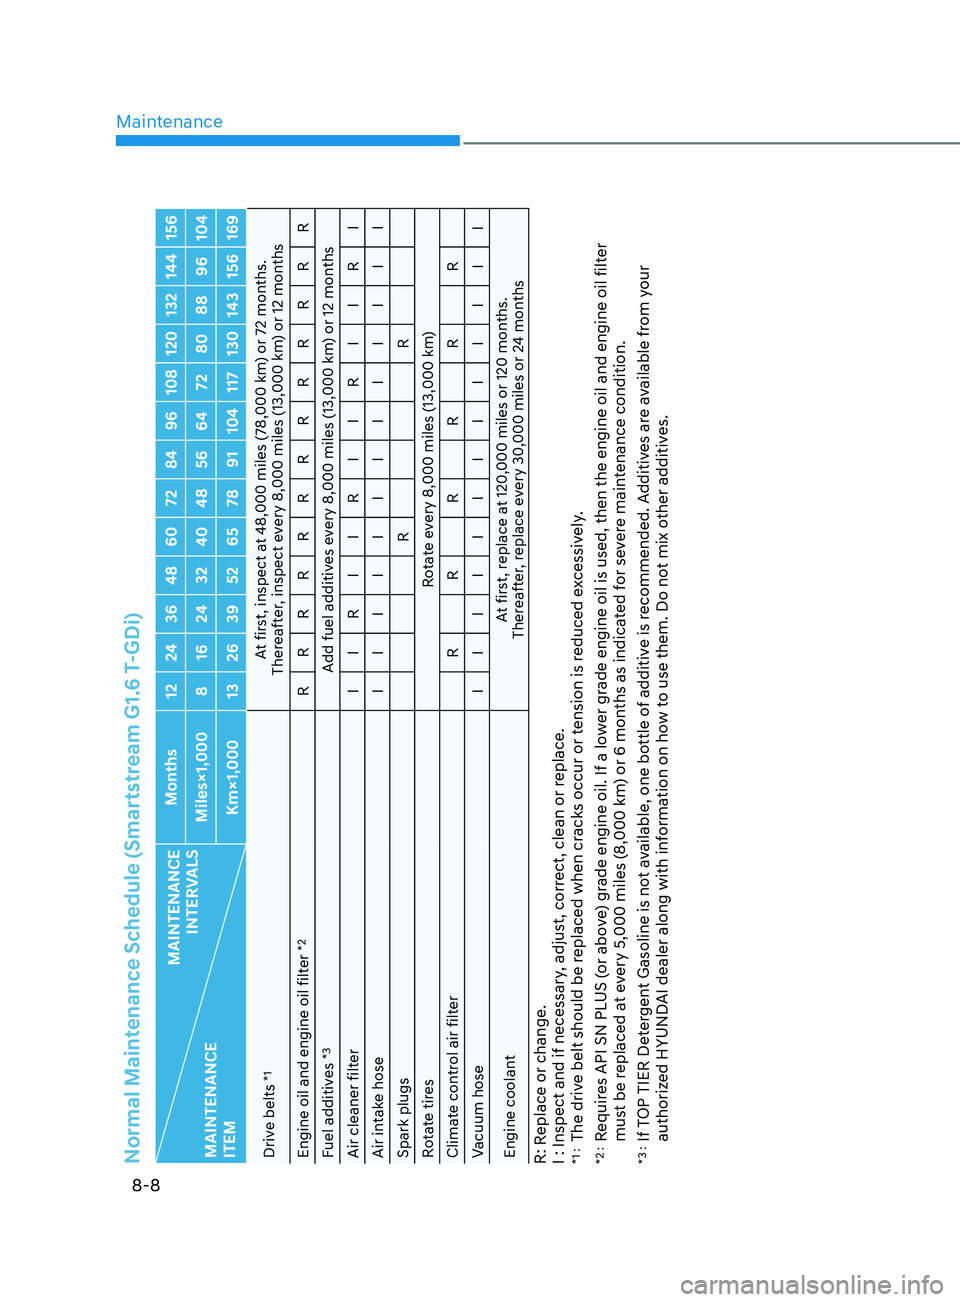 HYUNDAI SONATA LIMITED 2020  Owners Manual Maintenance
8-8
Normal Maintenance Schedule (Smartstream G1.6 T-GDi)
MAINTENANCE  INTERVALS
MAINTENANCE  
ITEM Months 12 24 36 48 60 72 84 96 108 120 132 144 156
Miles×1,000 8 16 24 32 40 48 56 64 72